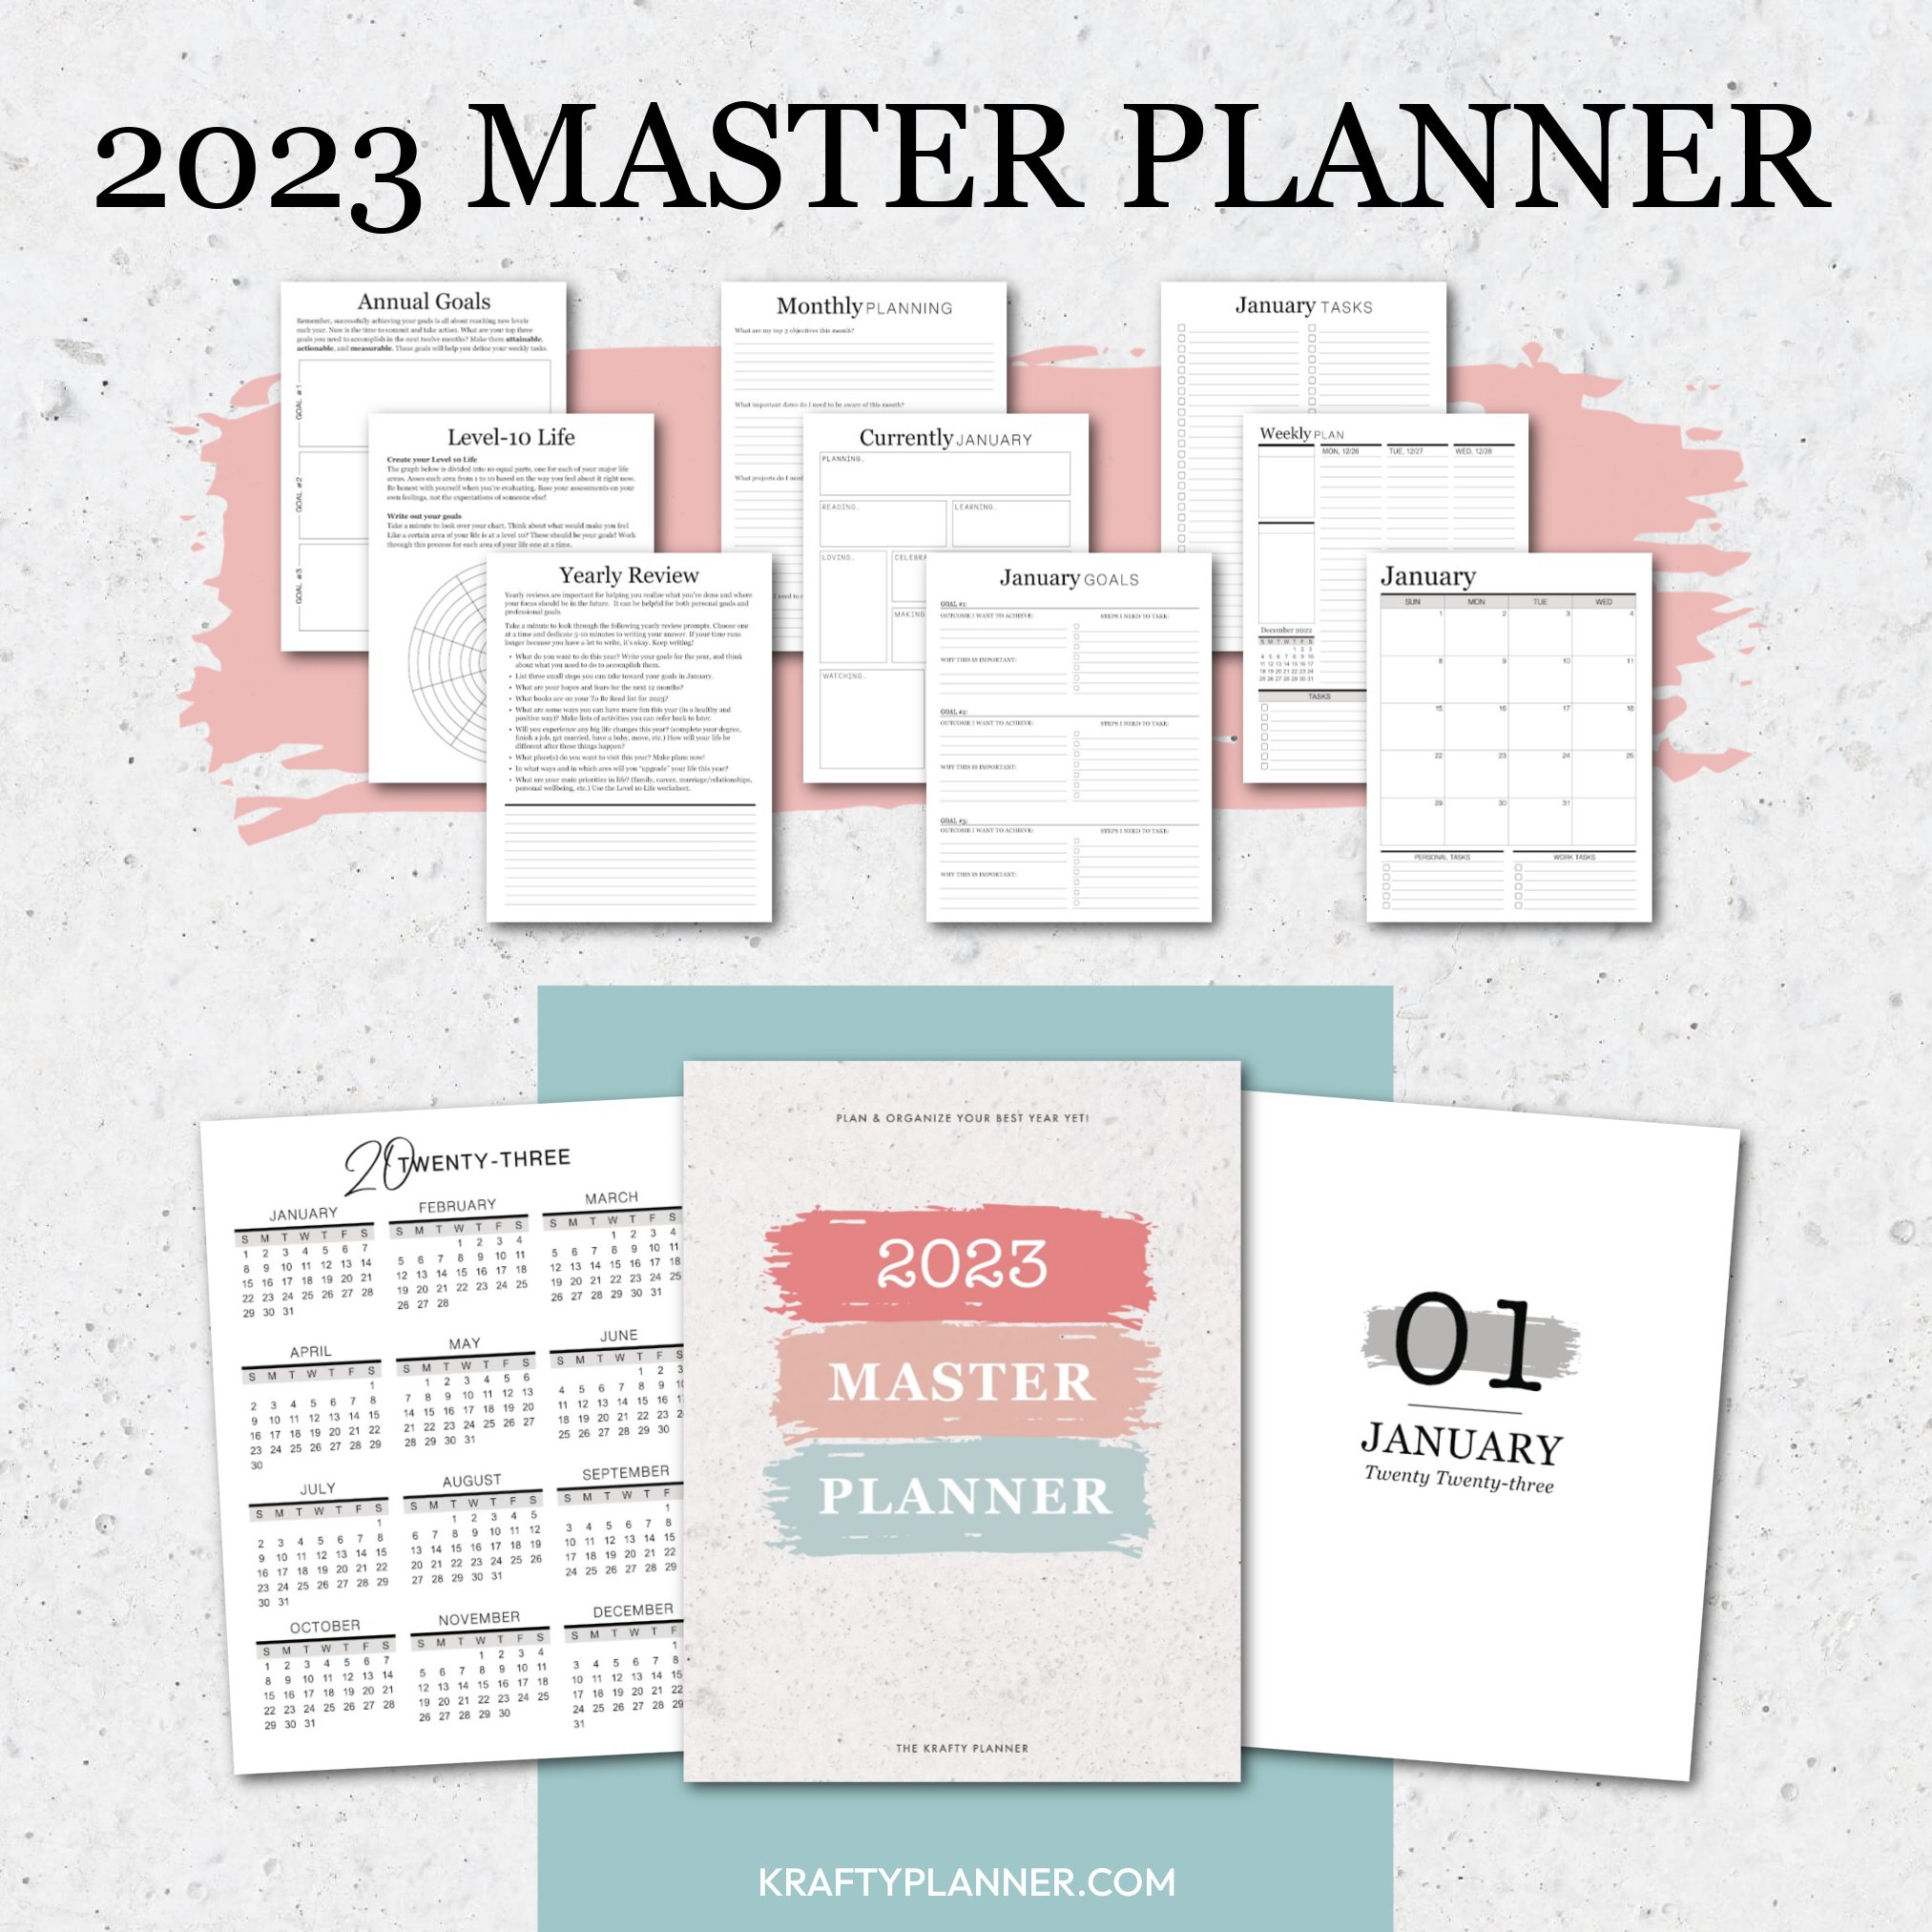 2023 Master Planner